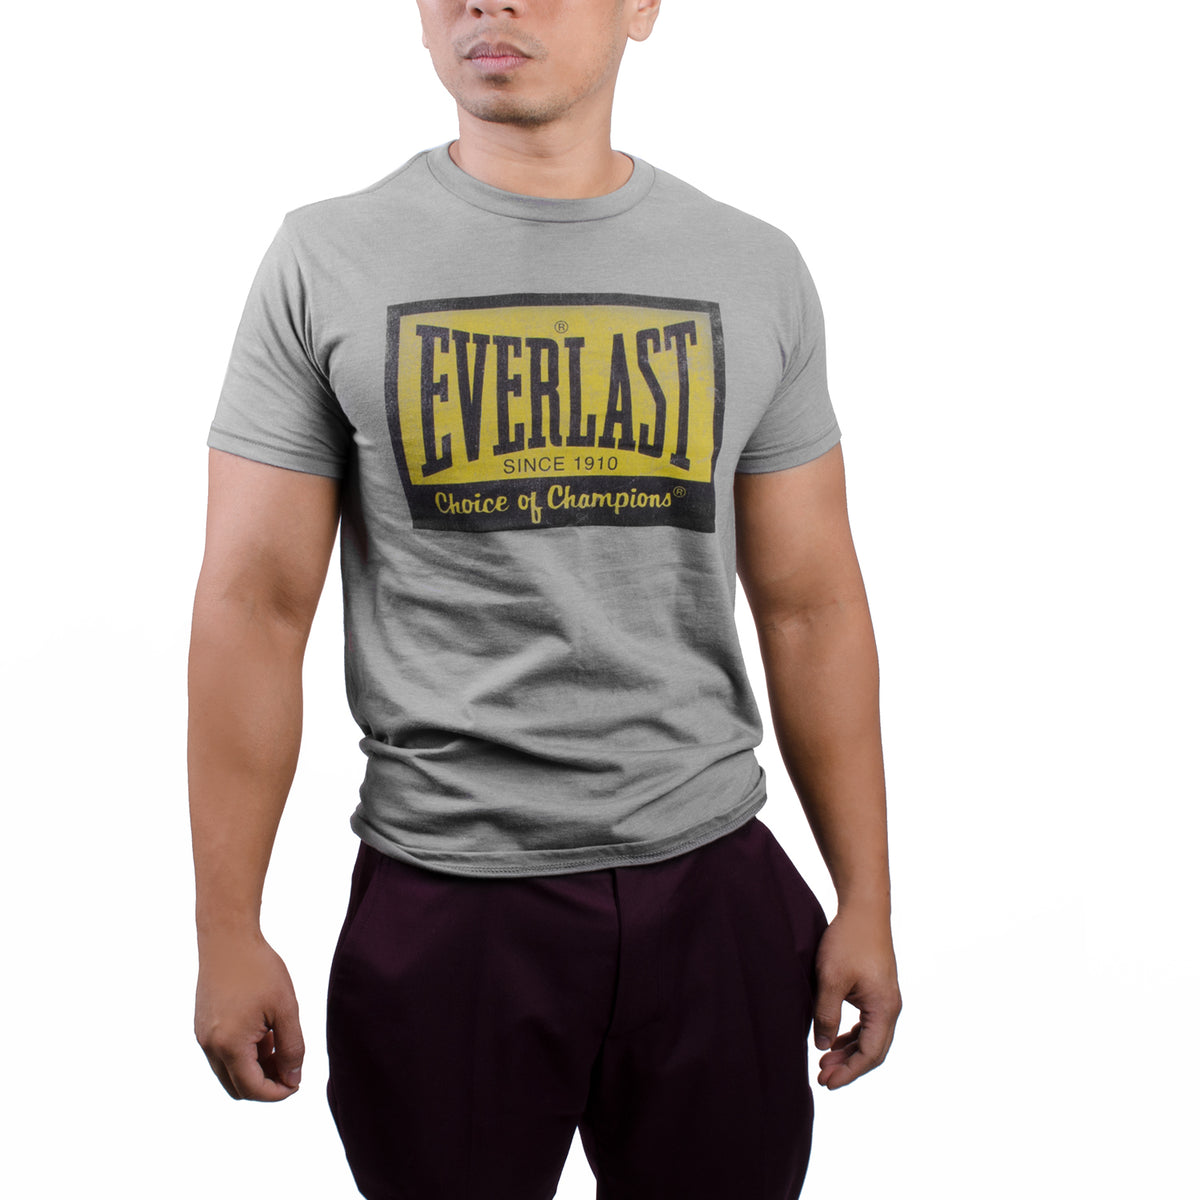 rijk Jane Austen Brein Everlast Choice of Champions Logo Shirt Grey – Everlast Canada